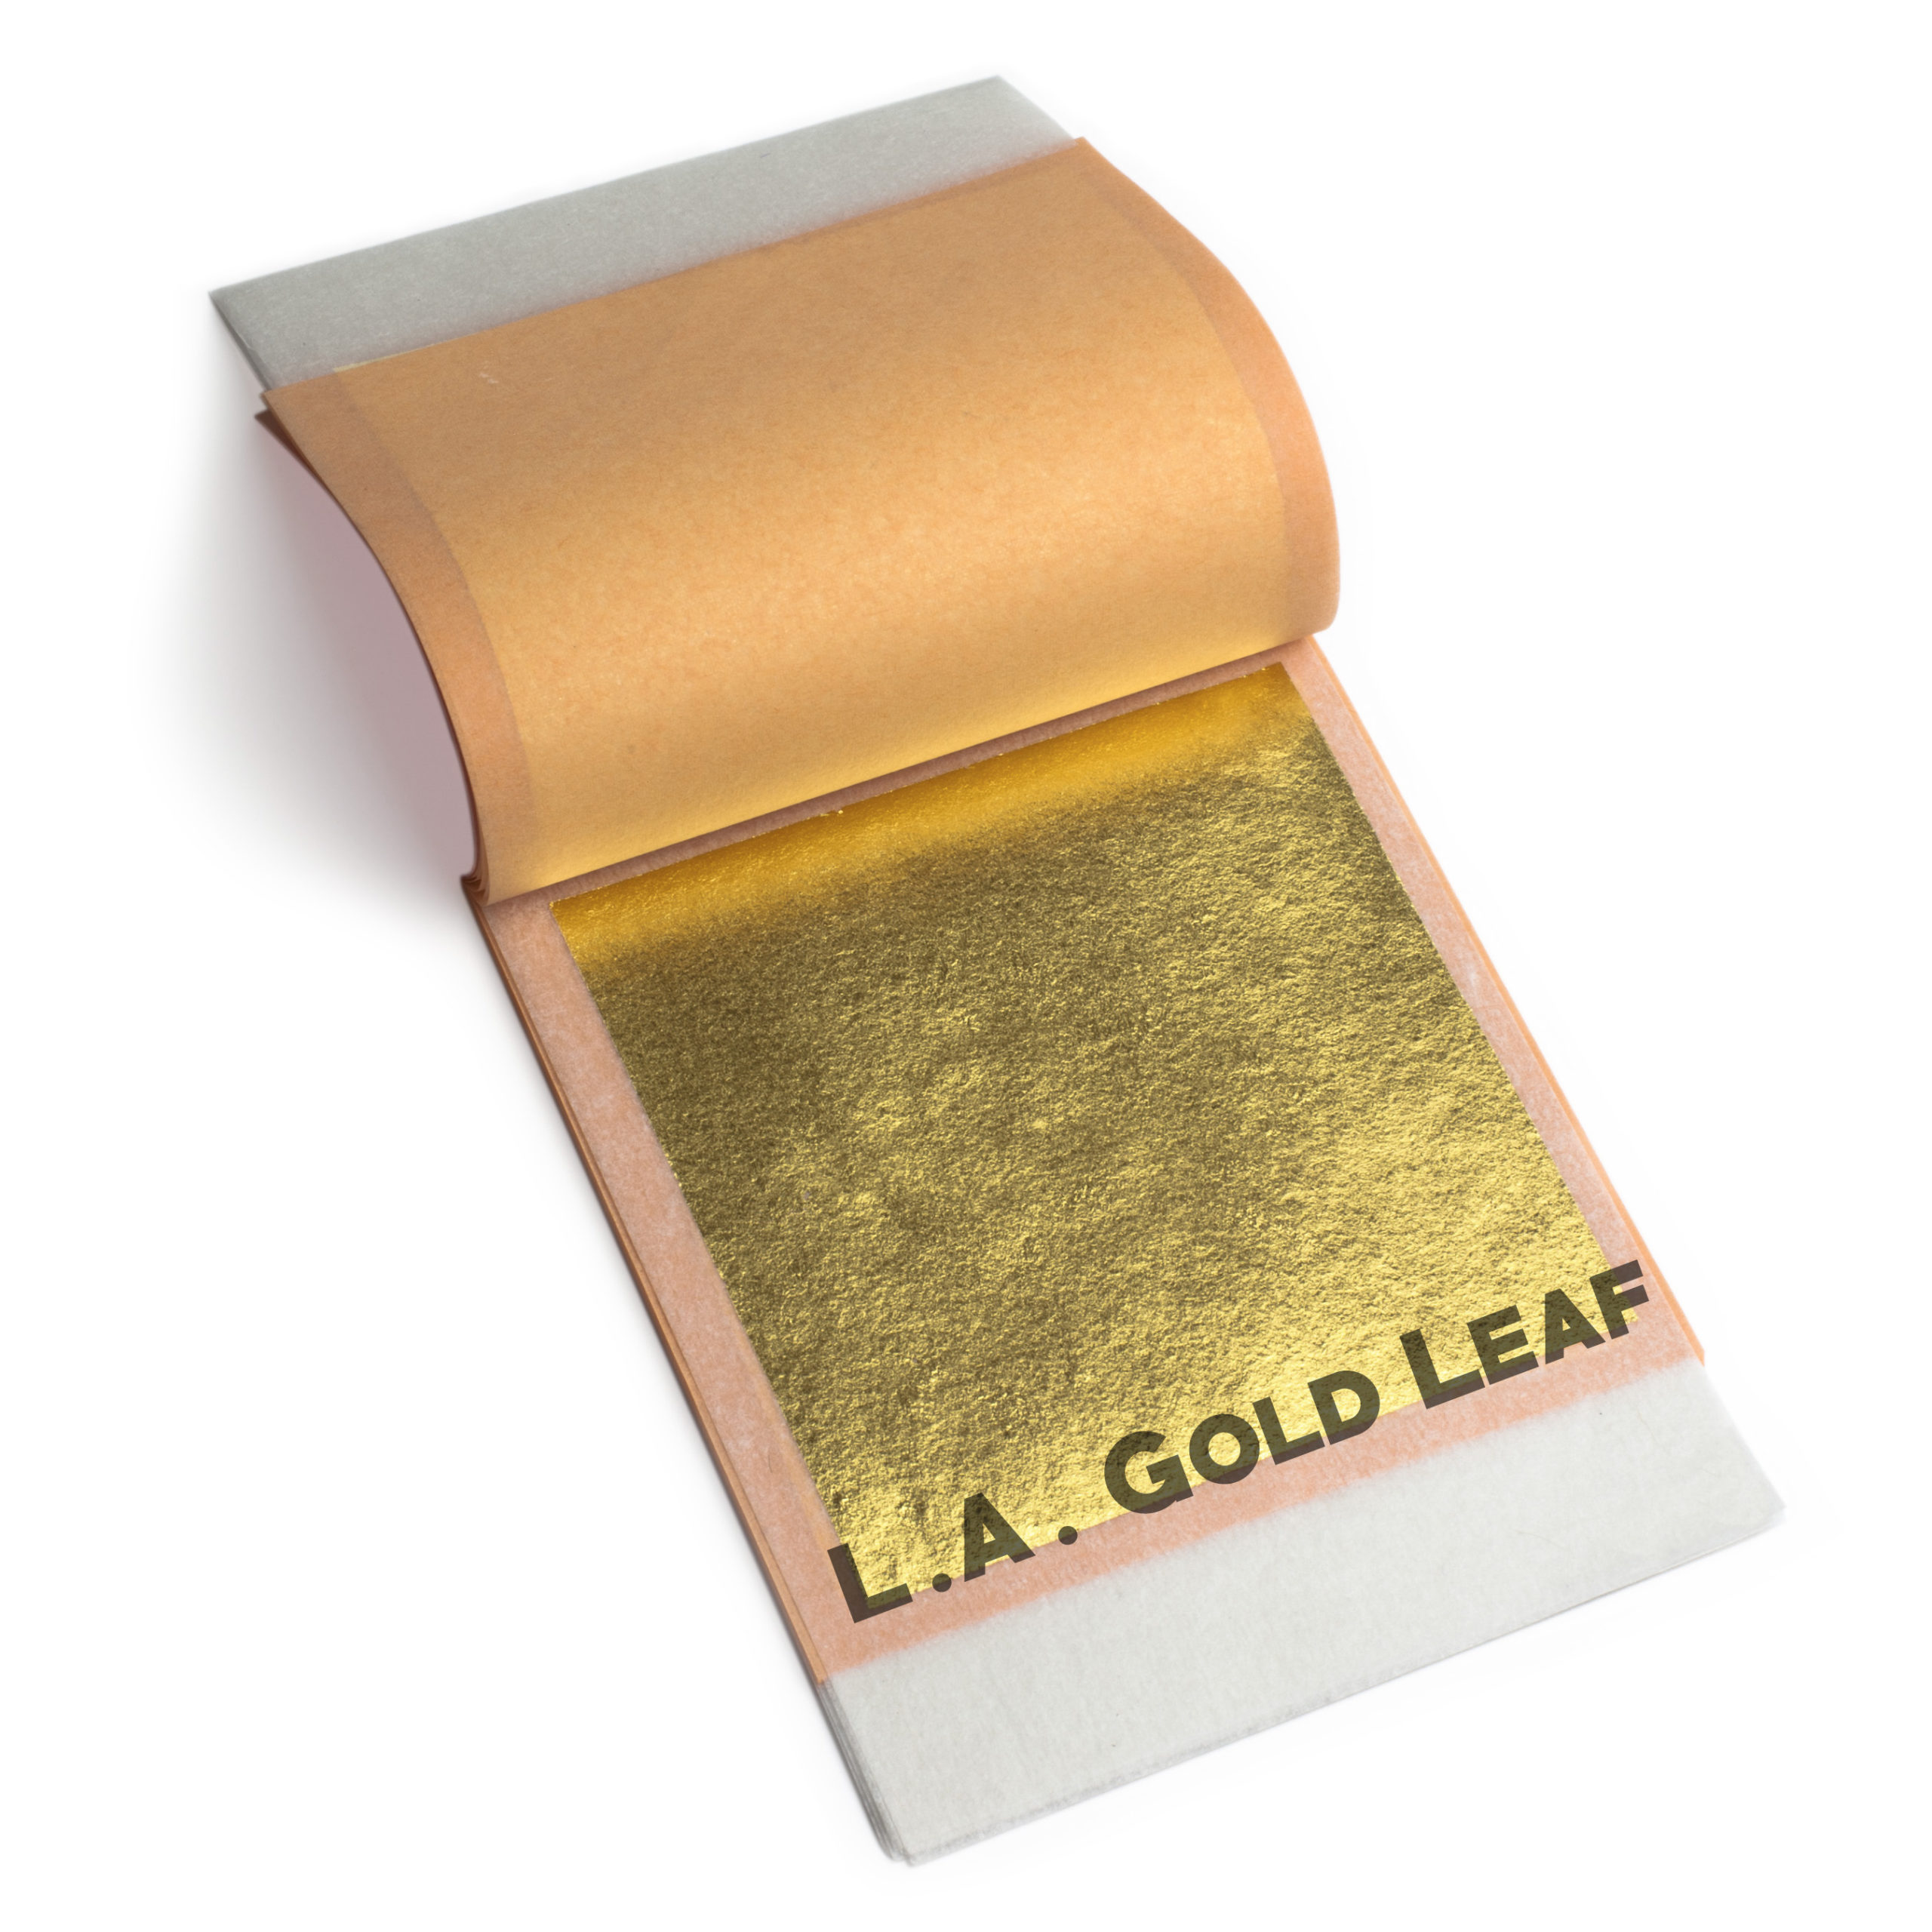 Sani Laoni Xnxx - Buy 24K Gold Leaf - L.A. Gold Leaf U.S.